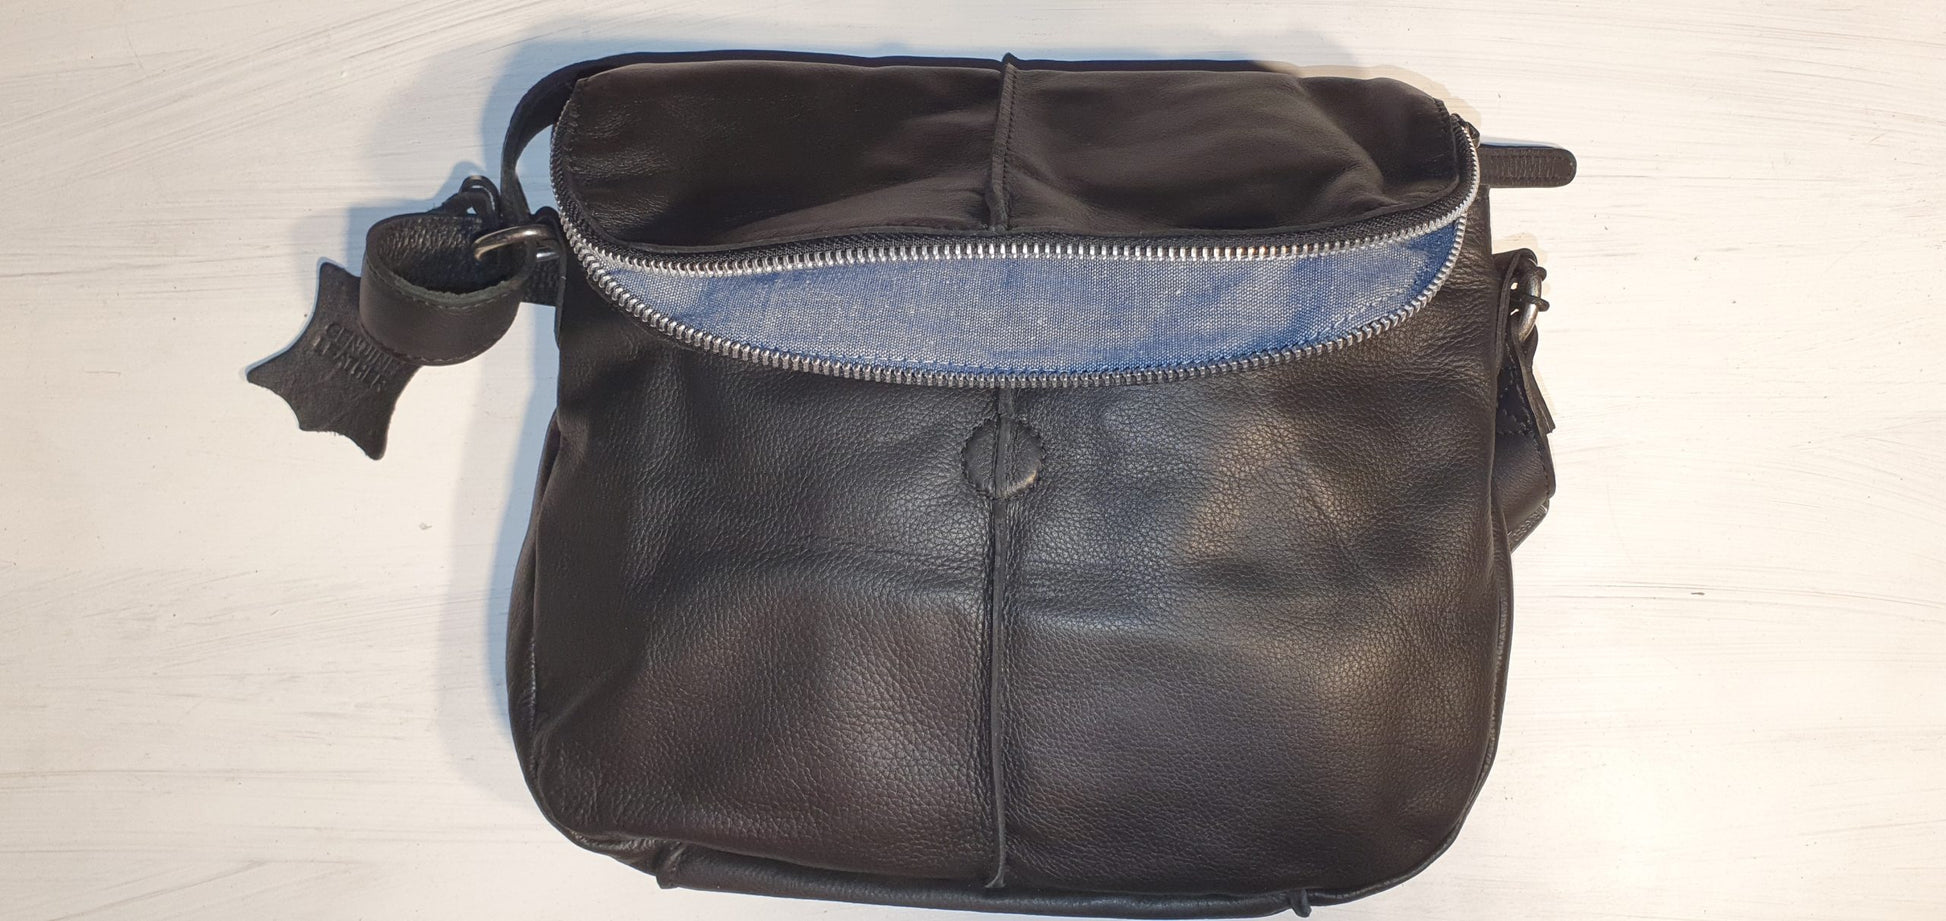 Rugged Hide Miranda Soft Cross Body Leather Bag - rainbowbags